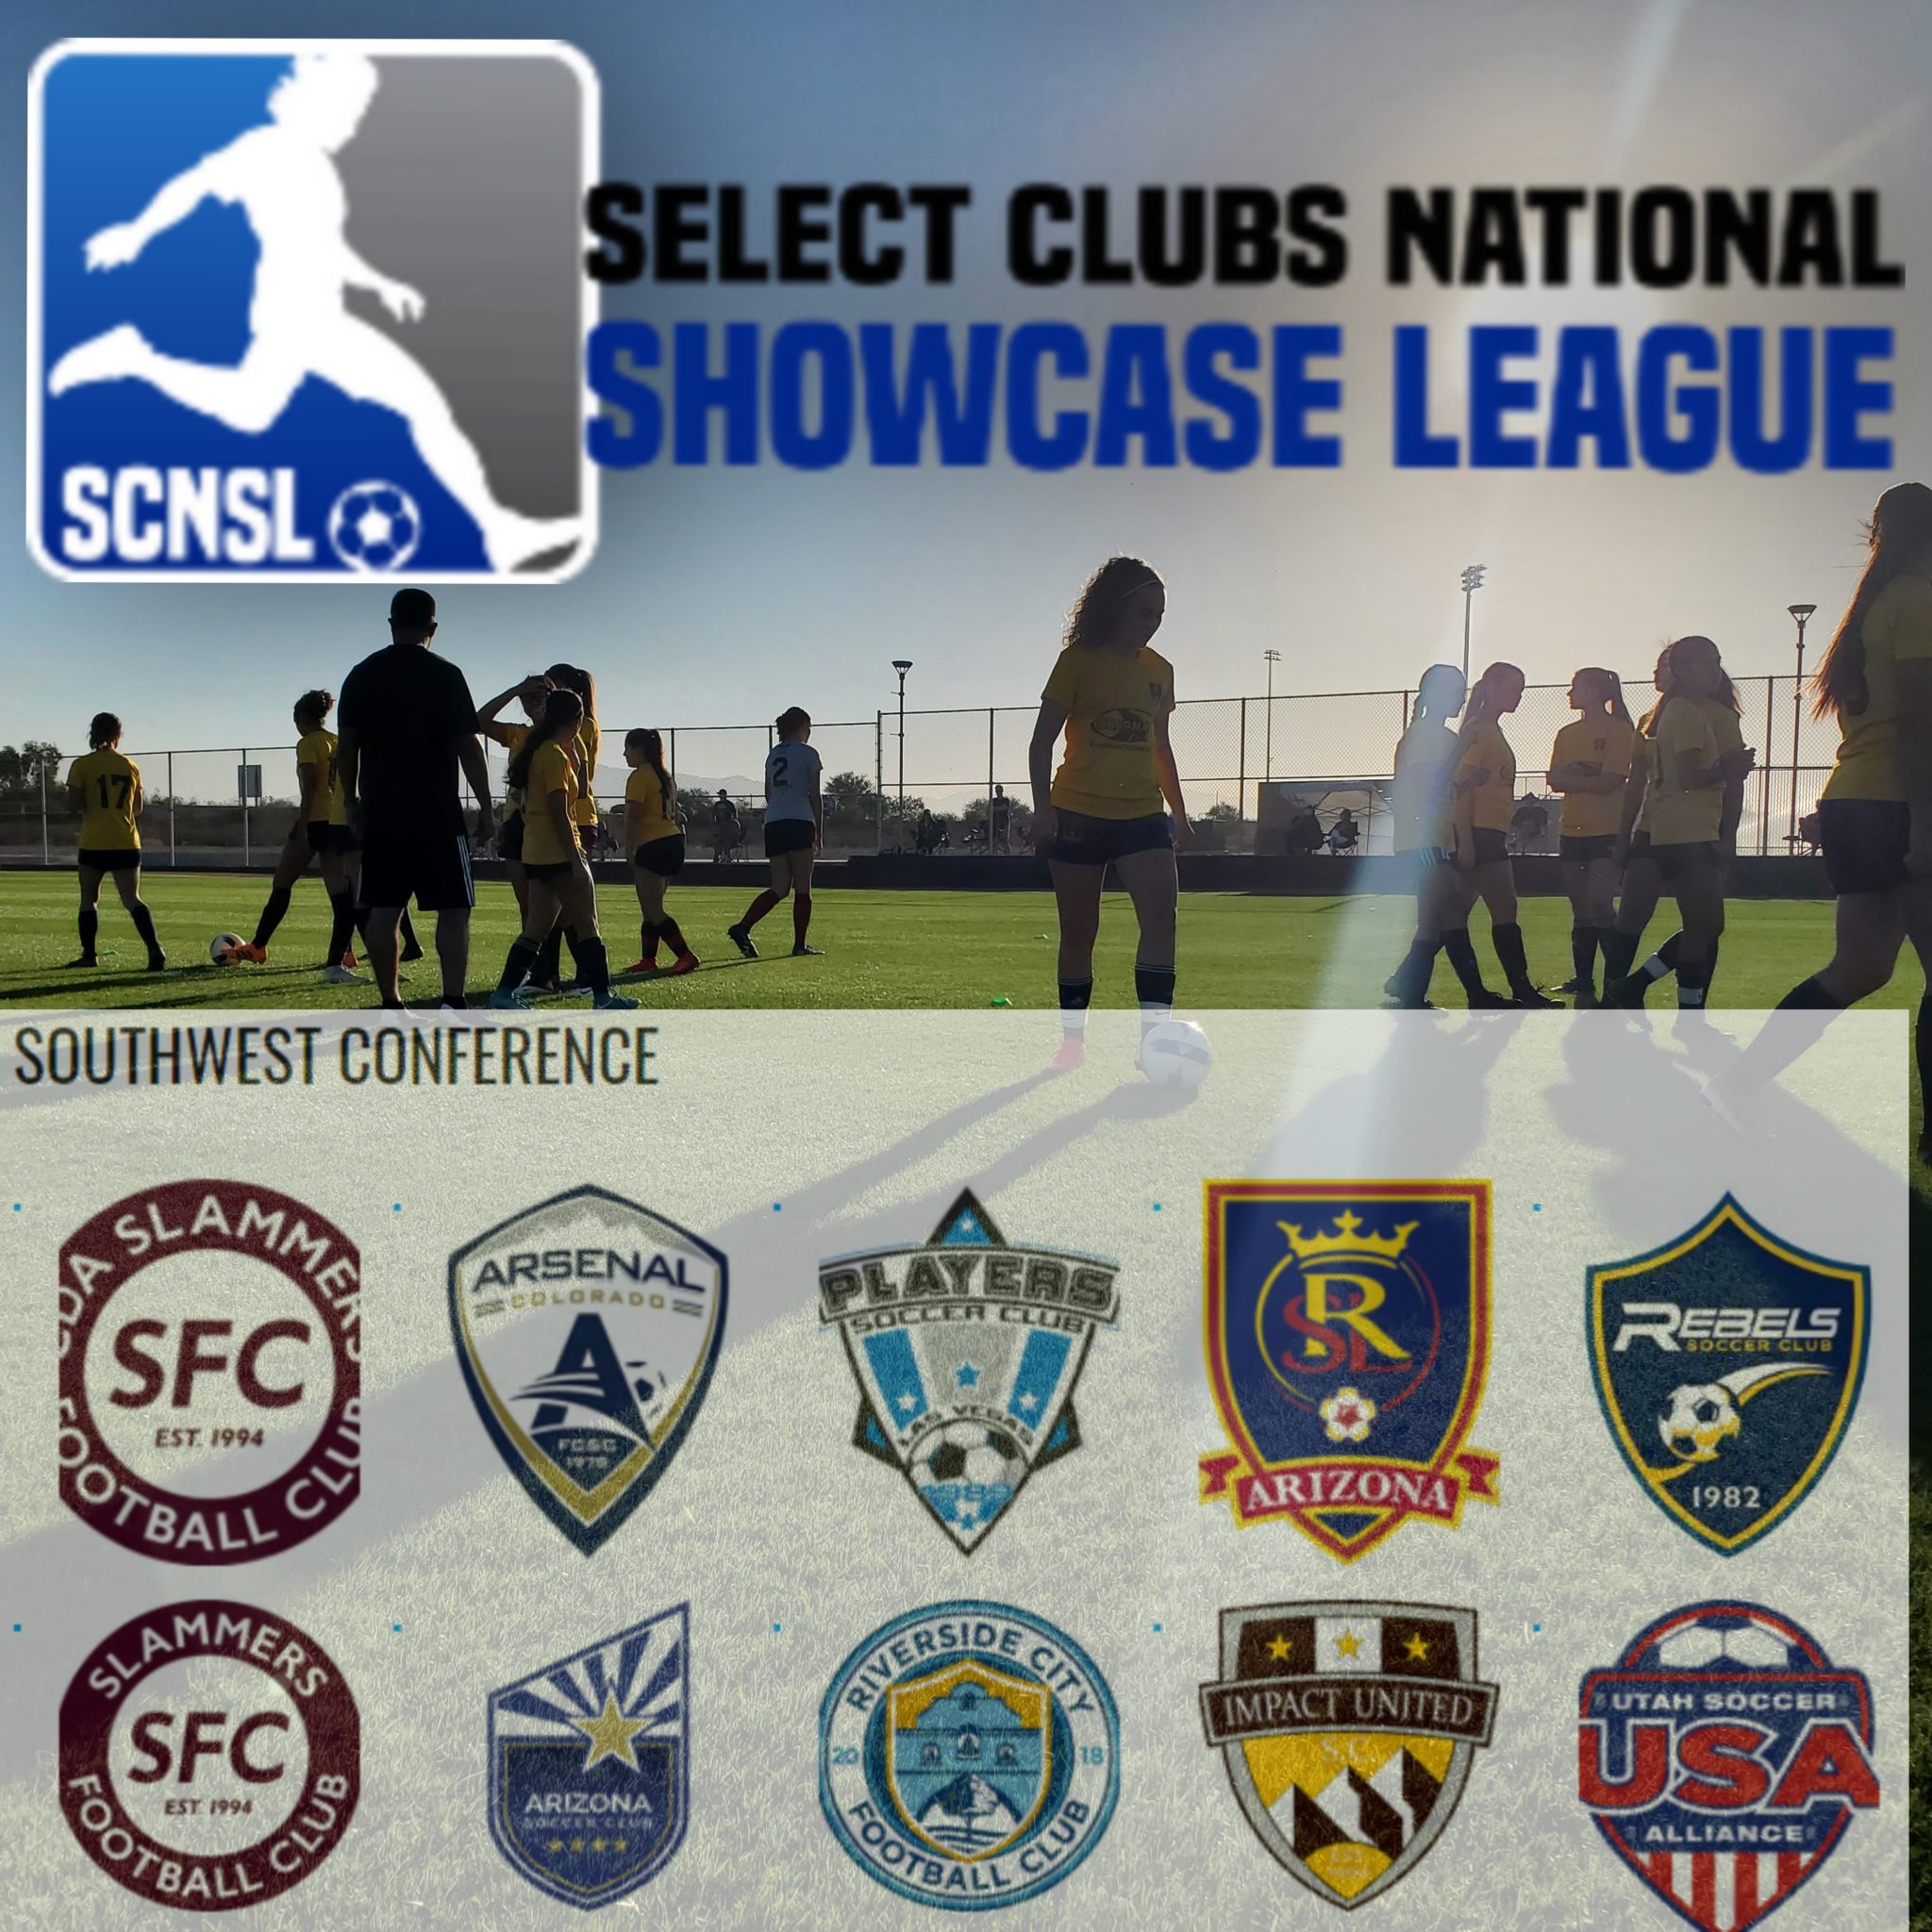 RSL-AZ Southern Arizona joins the Select Clubs National Showcase League